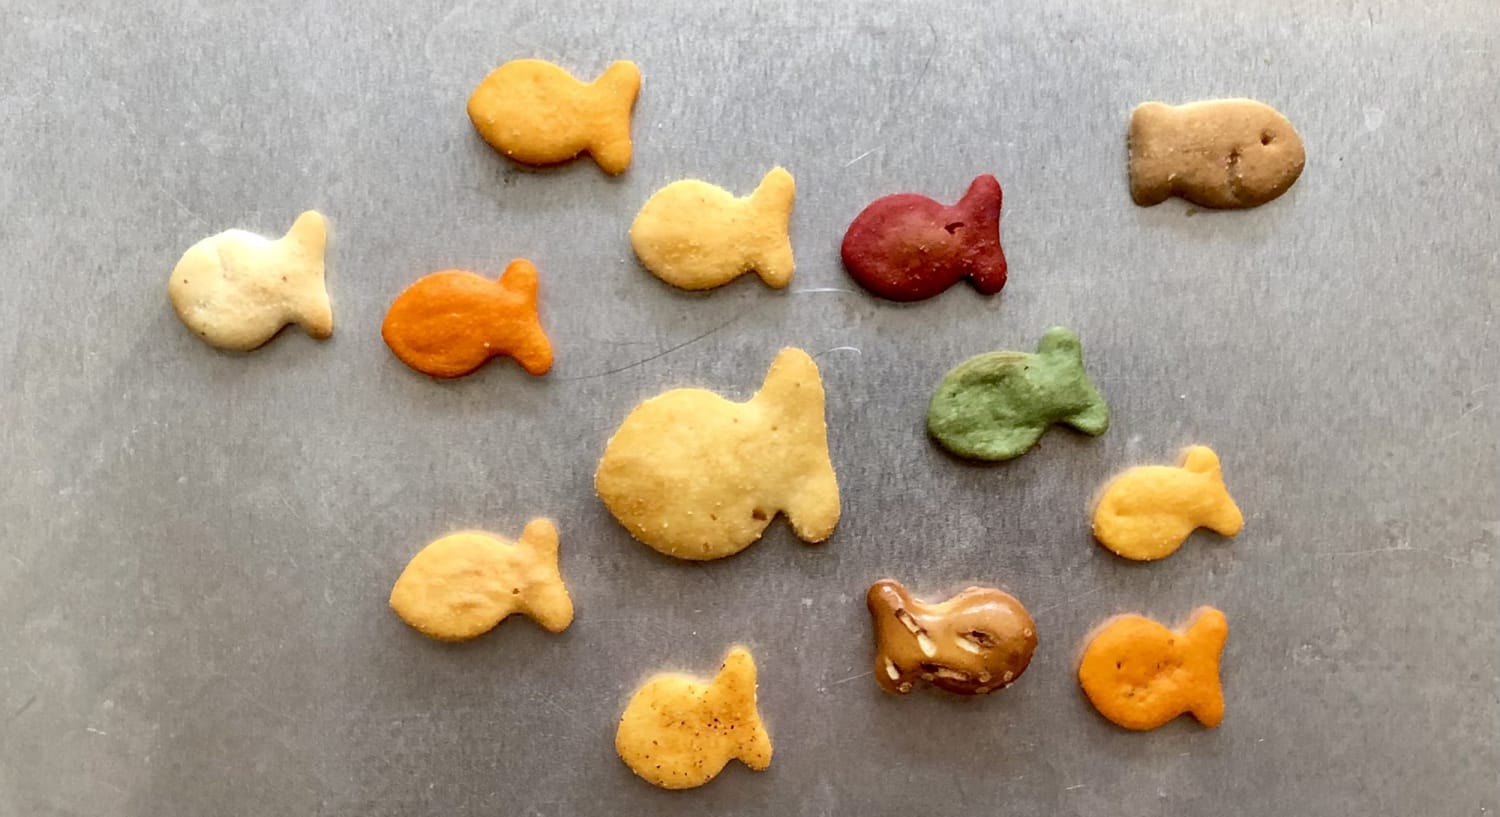 types of goldfish crackers